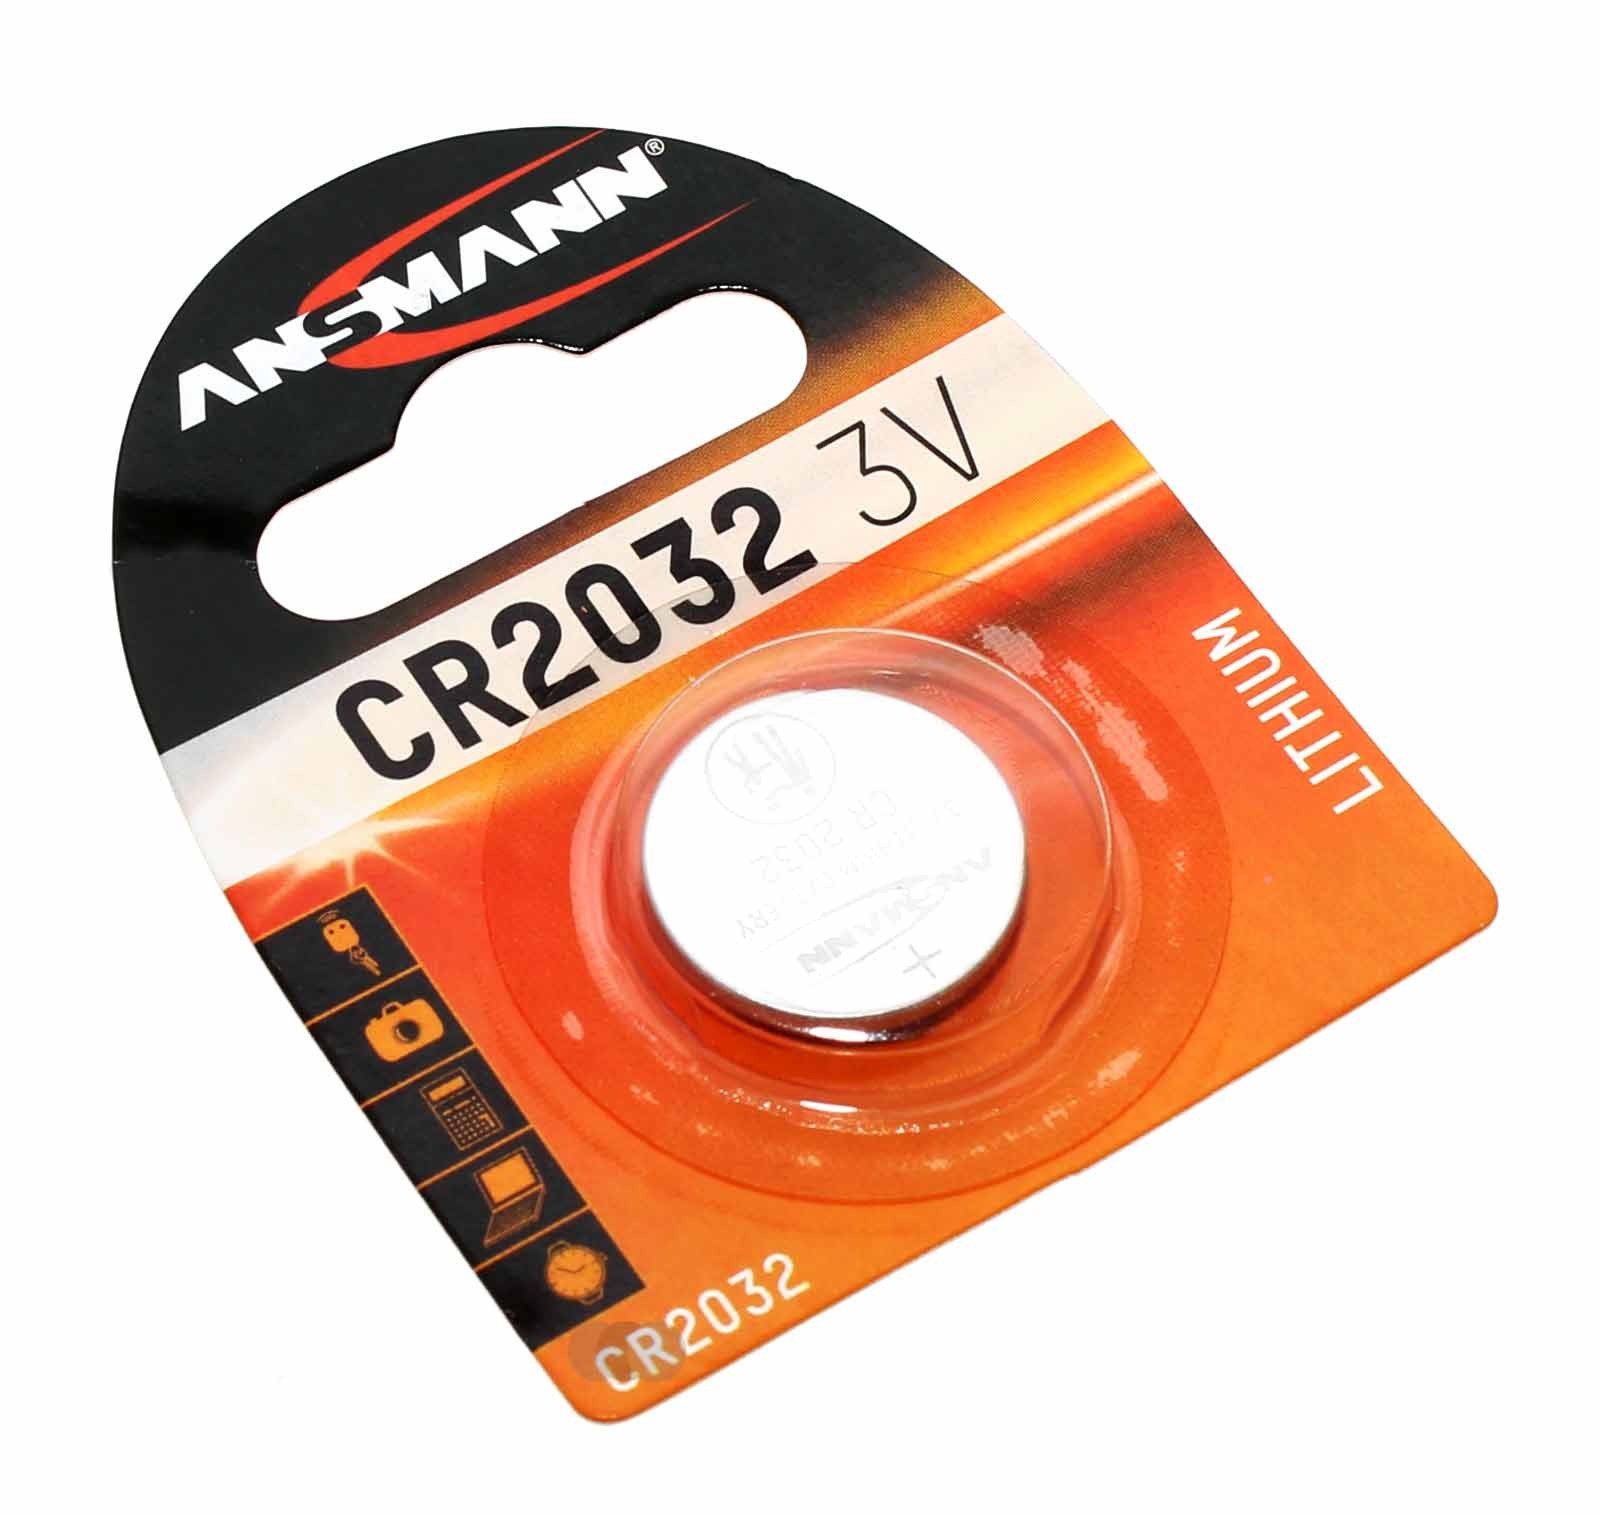 Ansmann CR2025 3V Lithium Coin Cell Battery